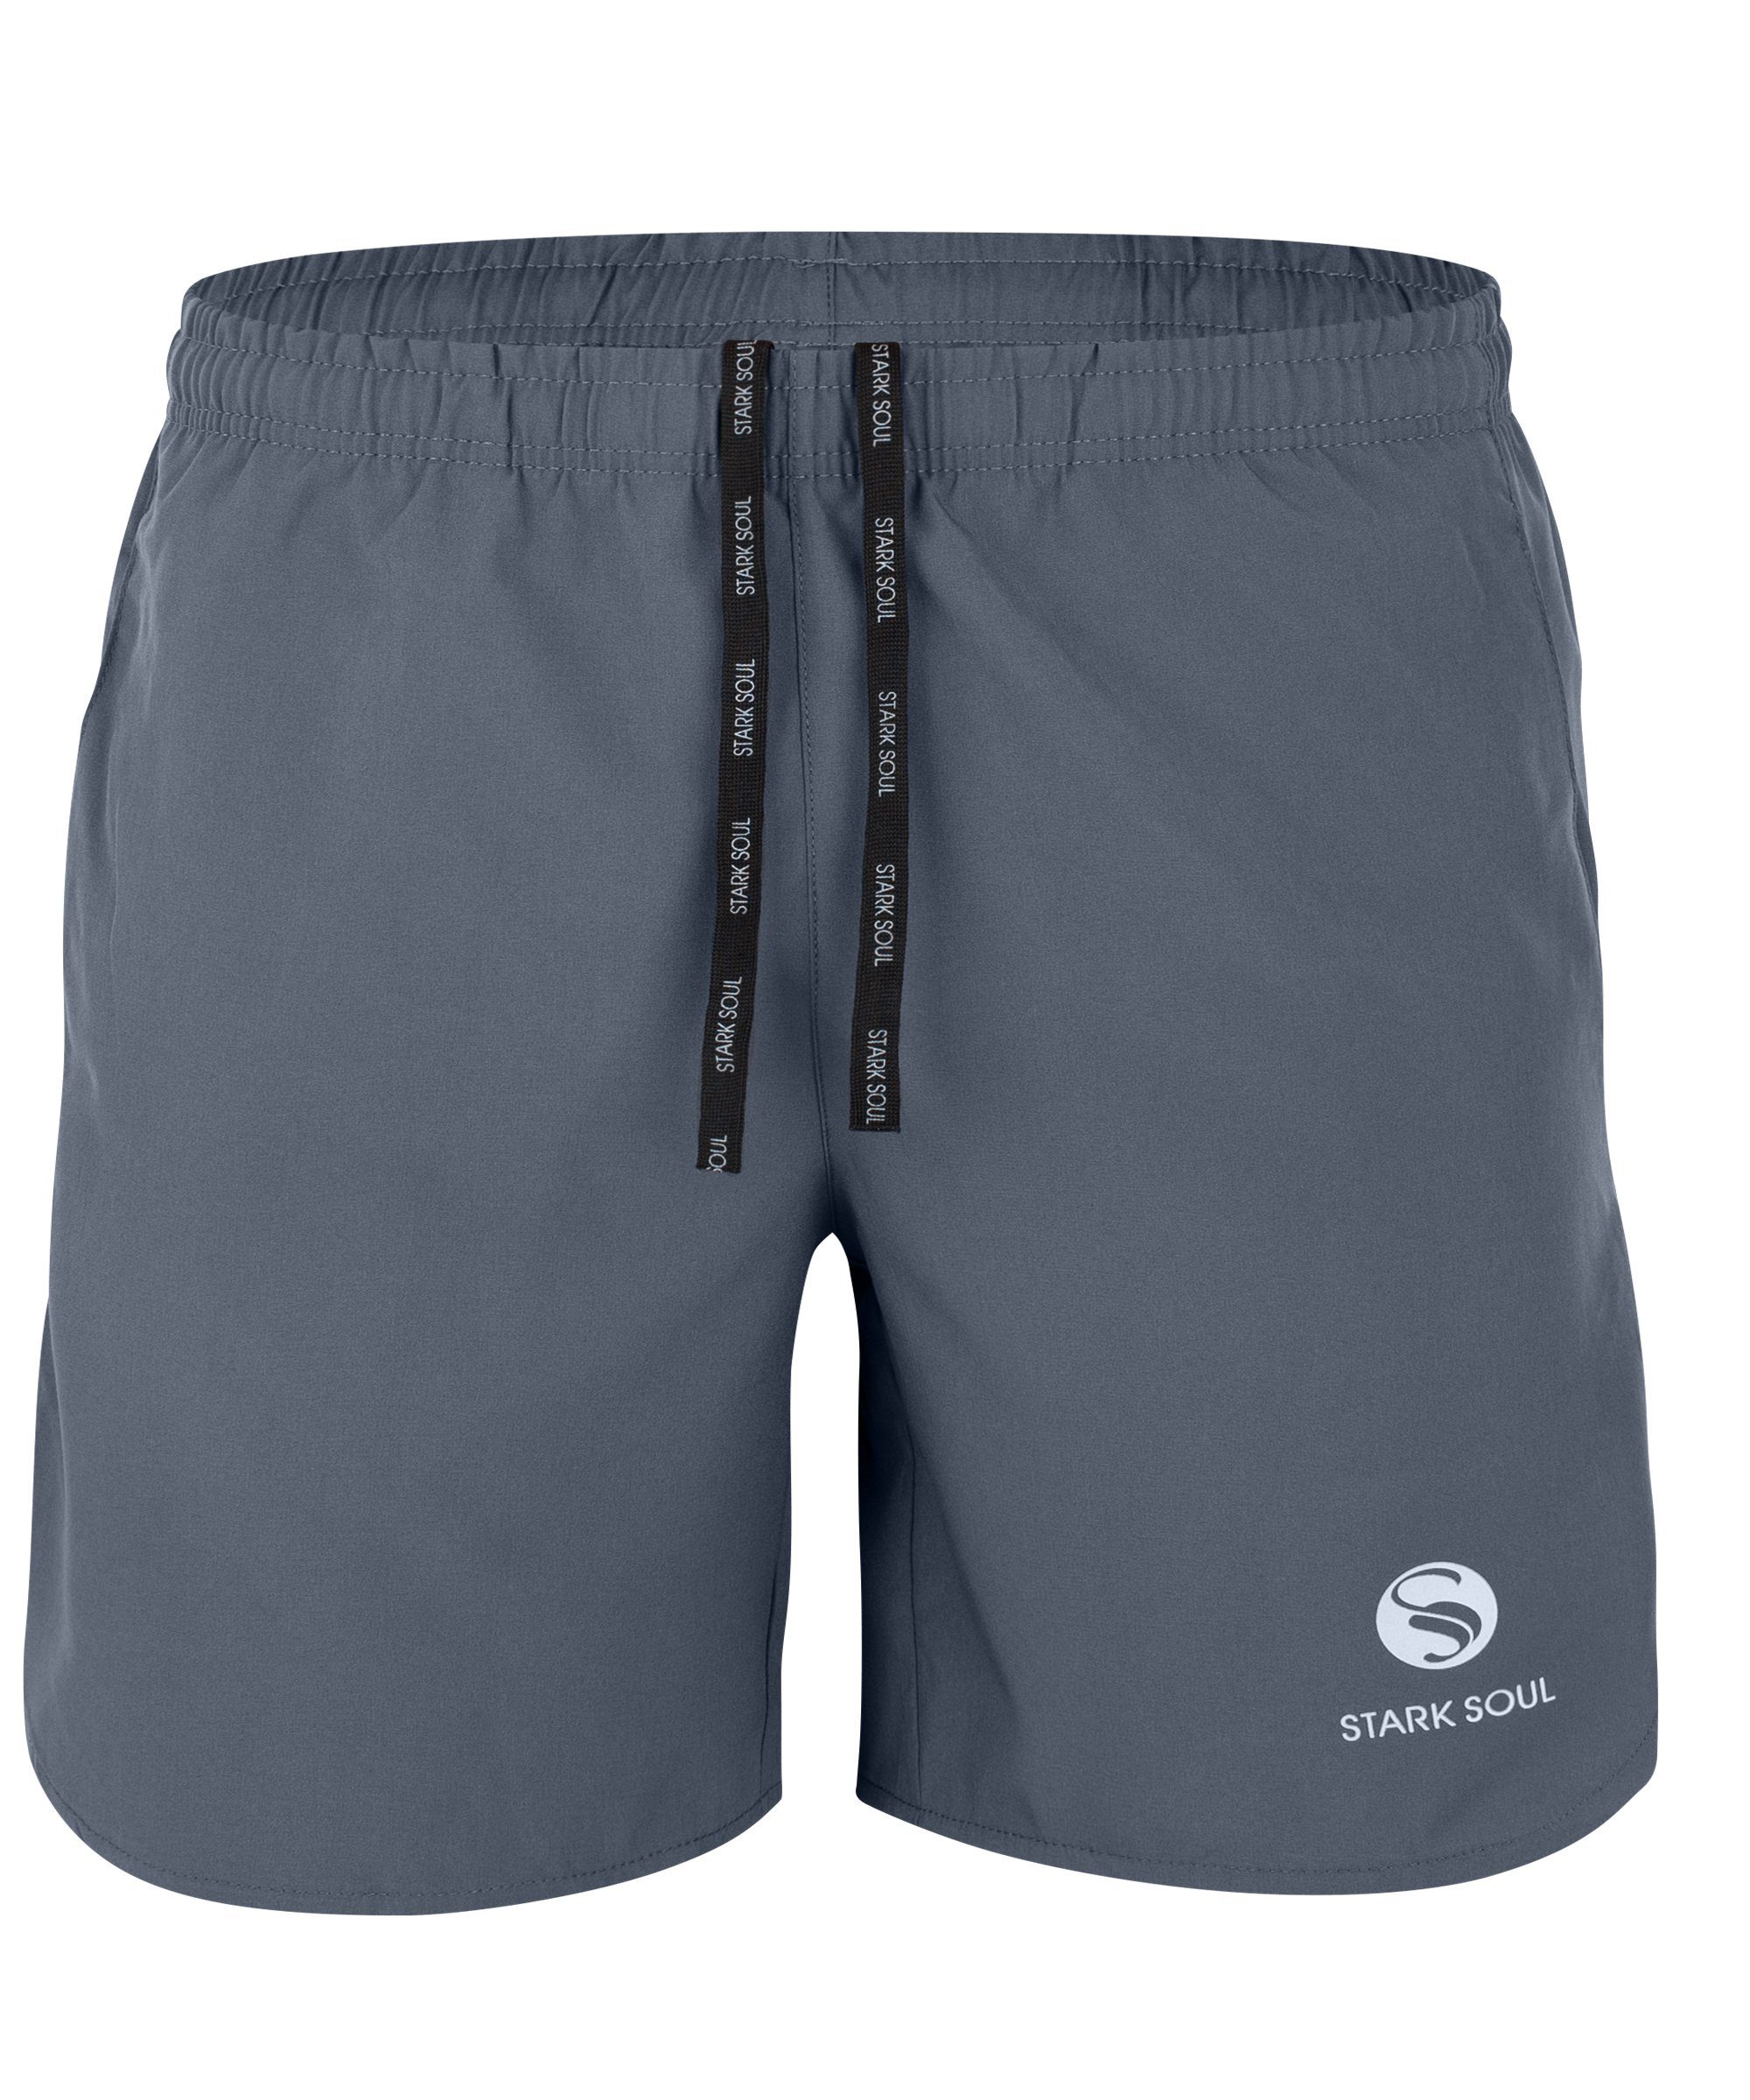 Stark Soul® Schnelltrocknend Quick kurze Material Grau Dry Funktionshose Sporthose aus 